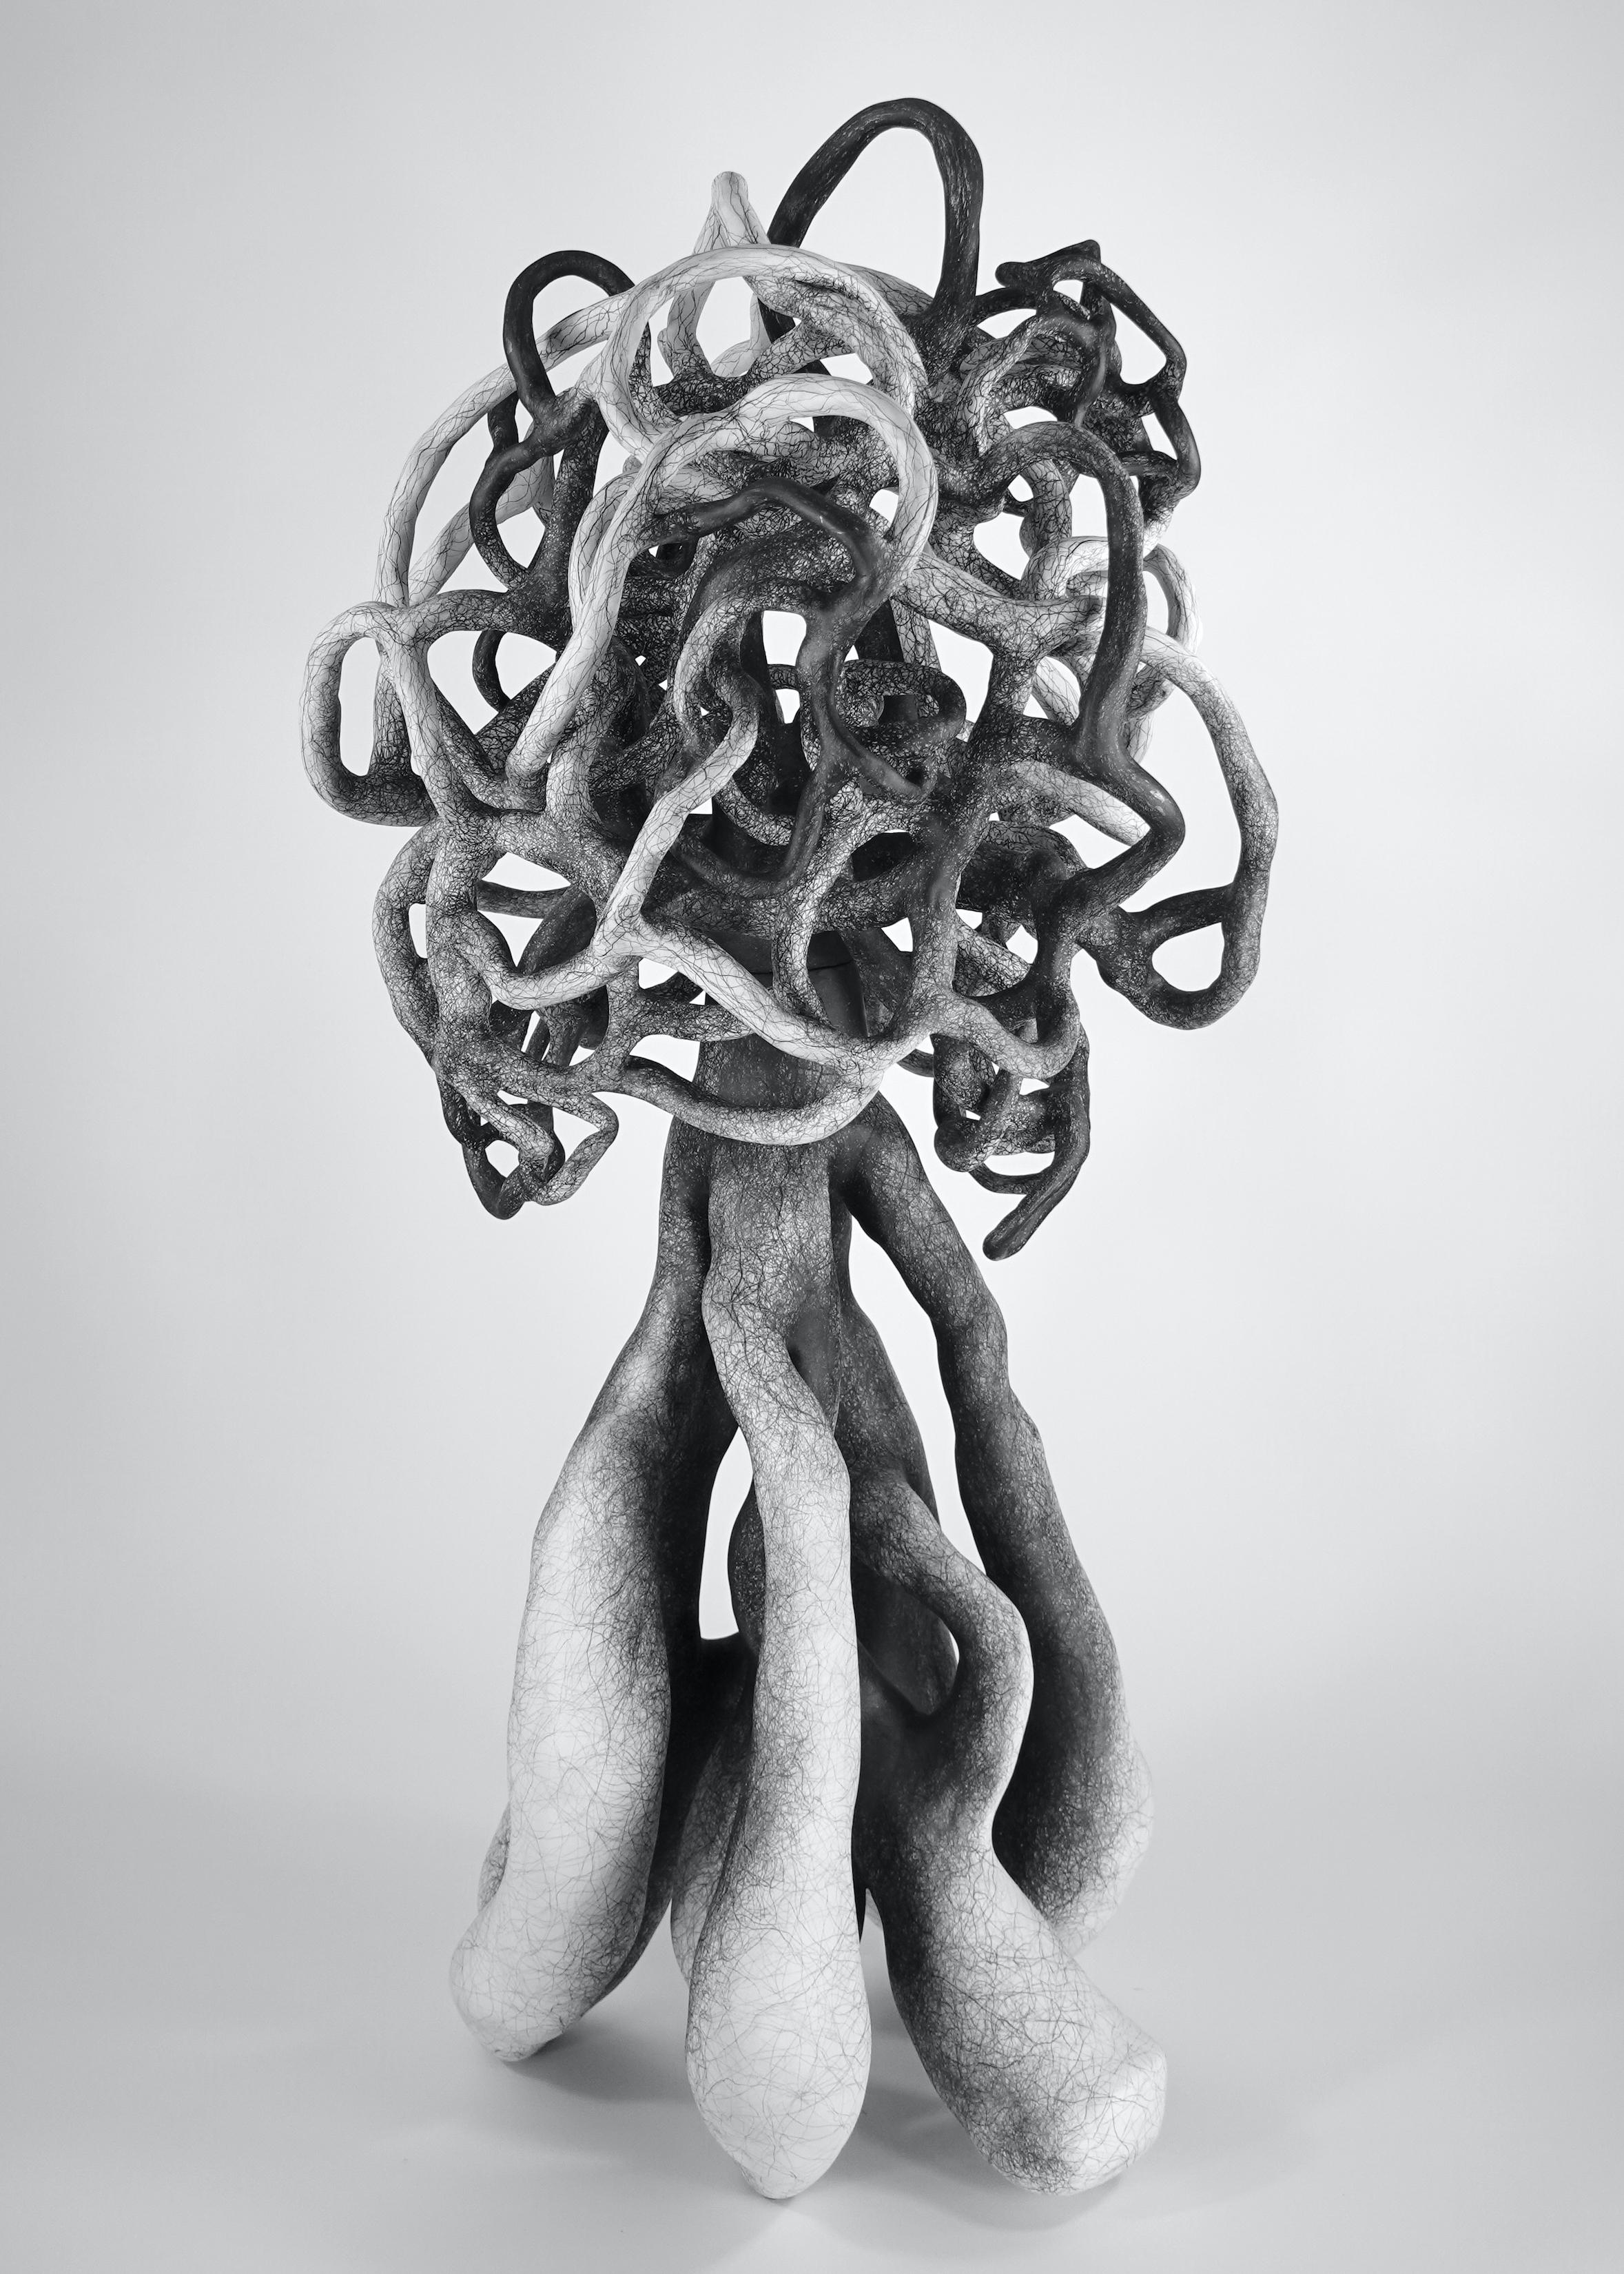 Abstract Sculpture Judi Tavill - Sculpture abstraite minimaliste en argile : «Escalate »